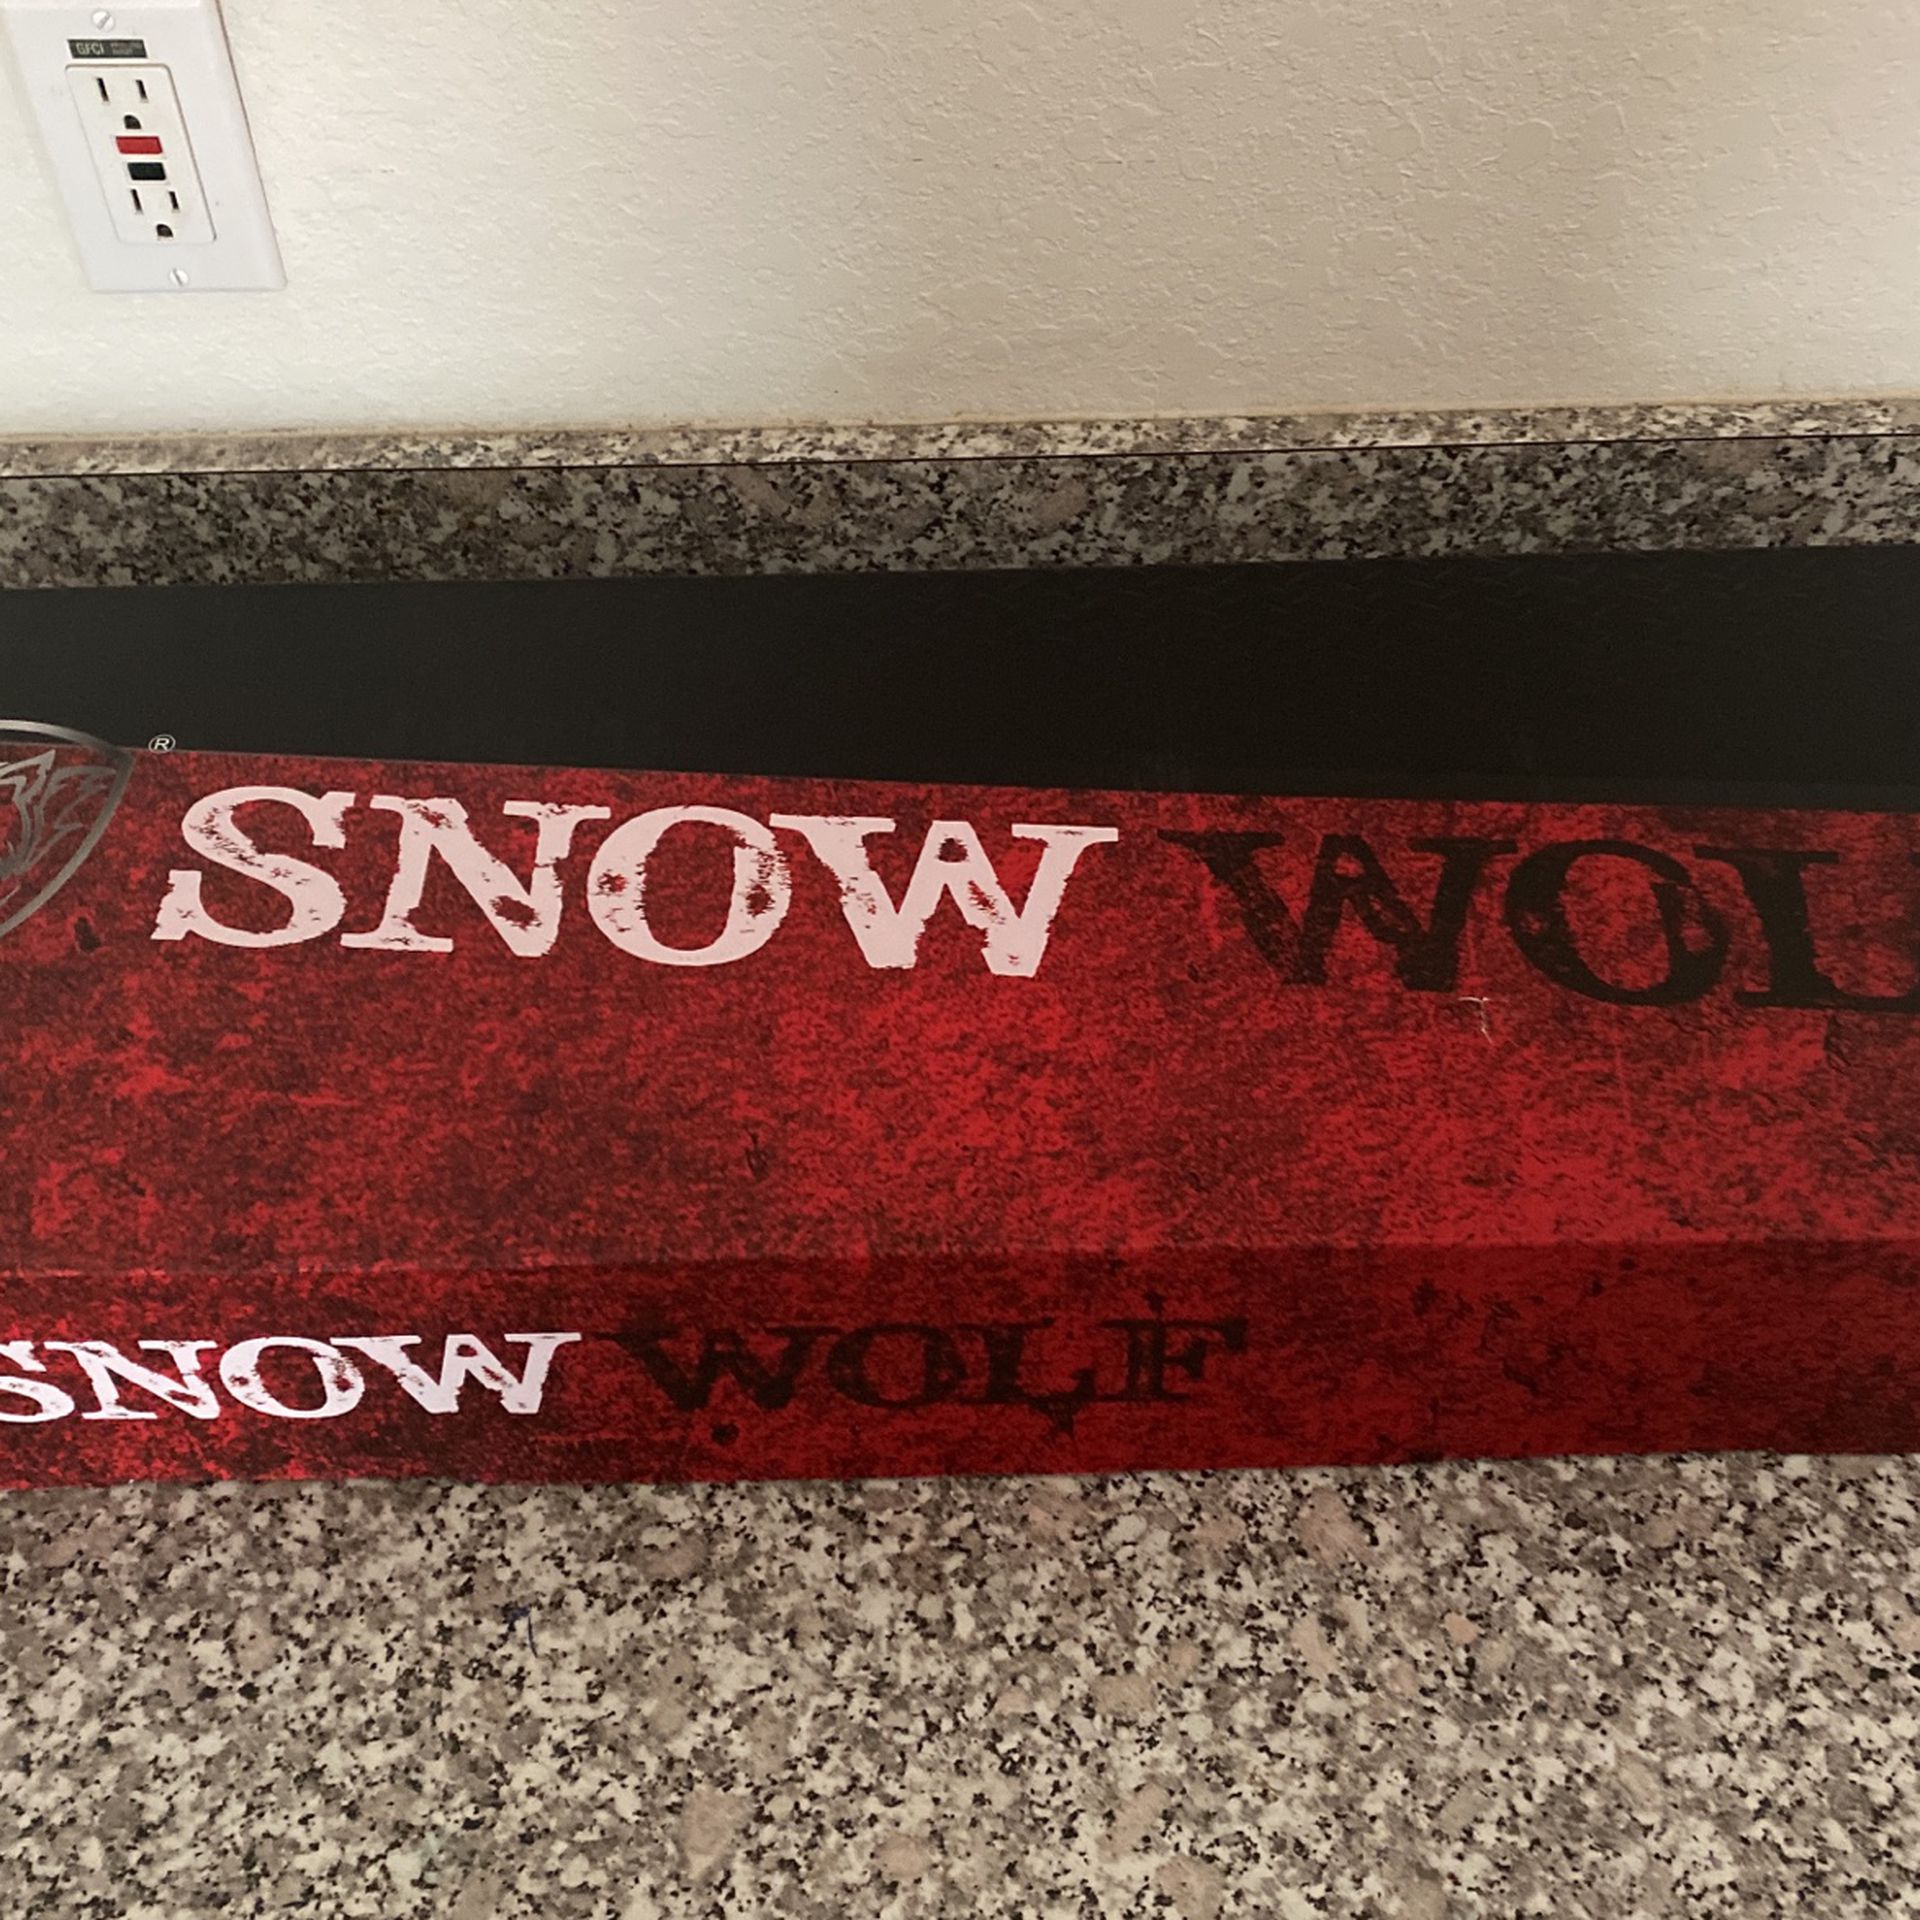 Snow Wolf Aug 